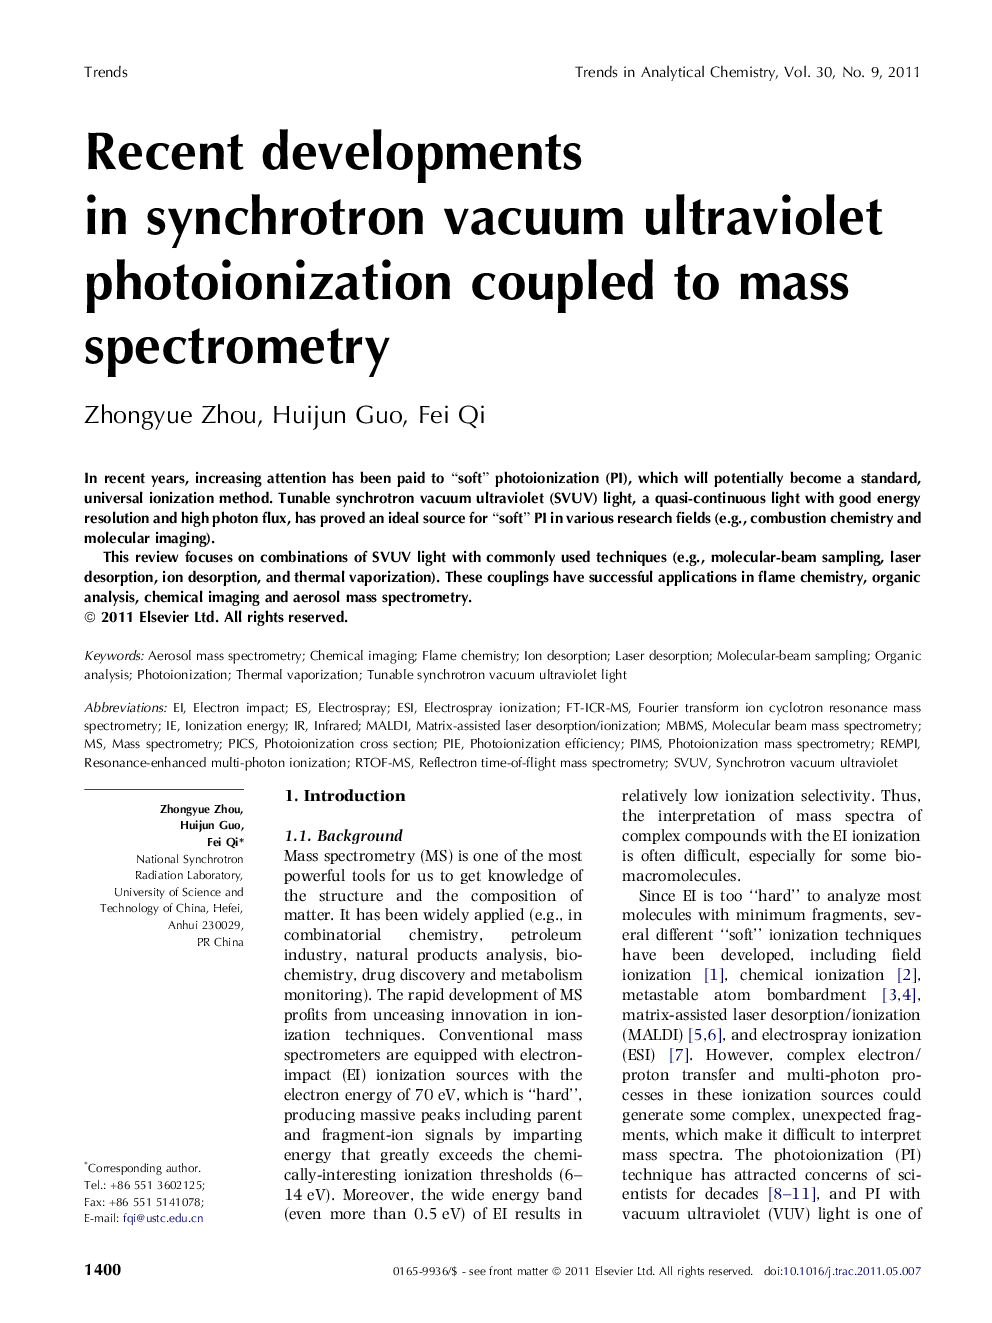 Recent developments in synchrotron vacuum ultraviolet photoionization coupled to mass spectrometry